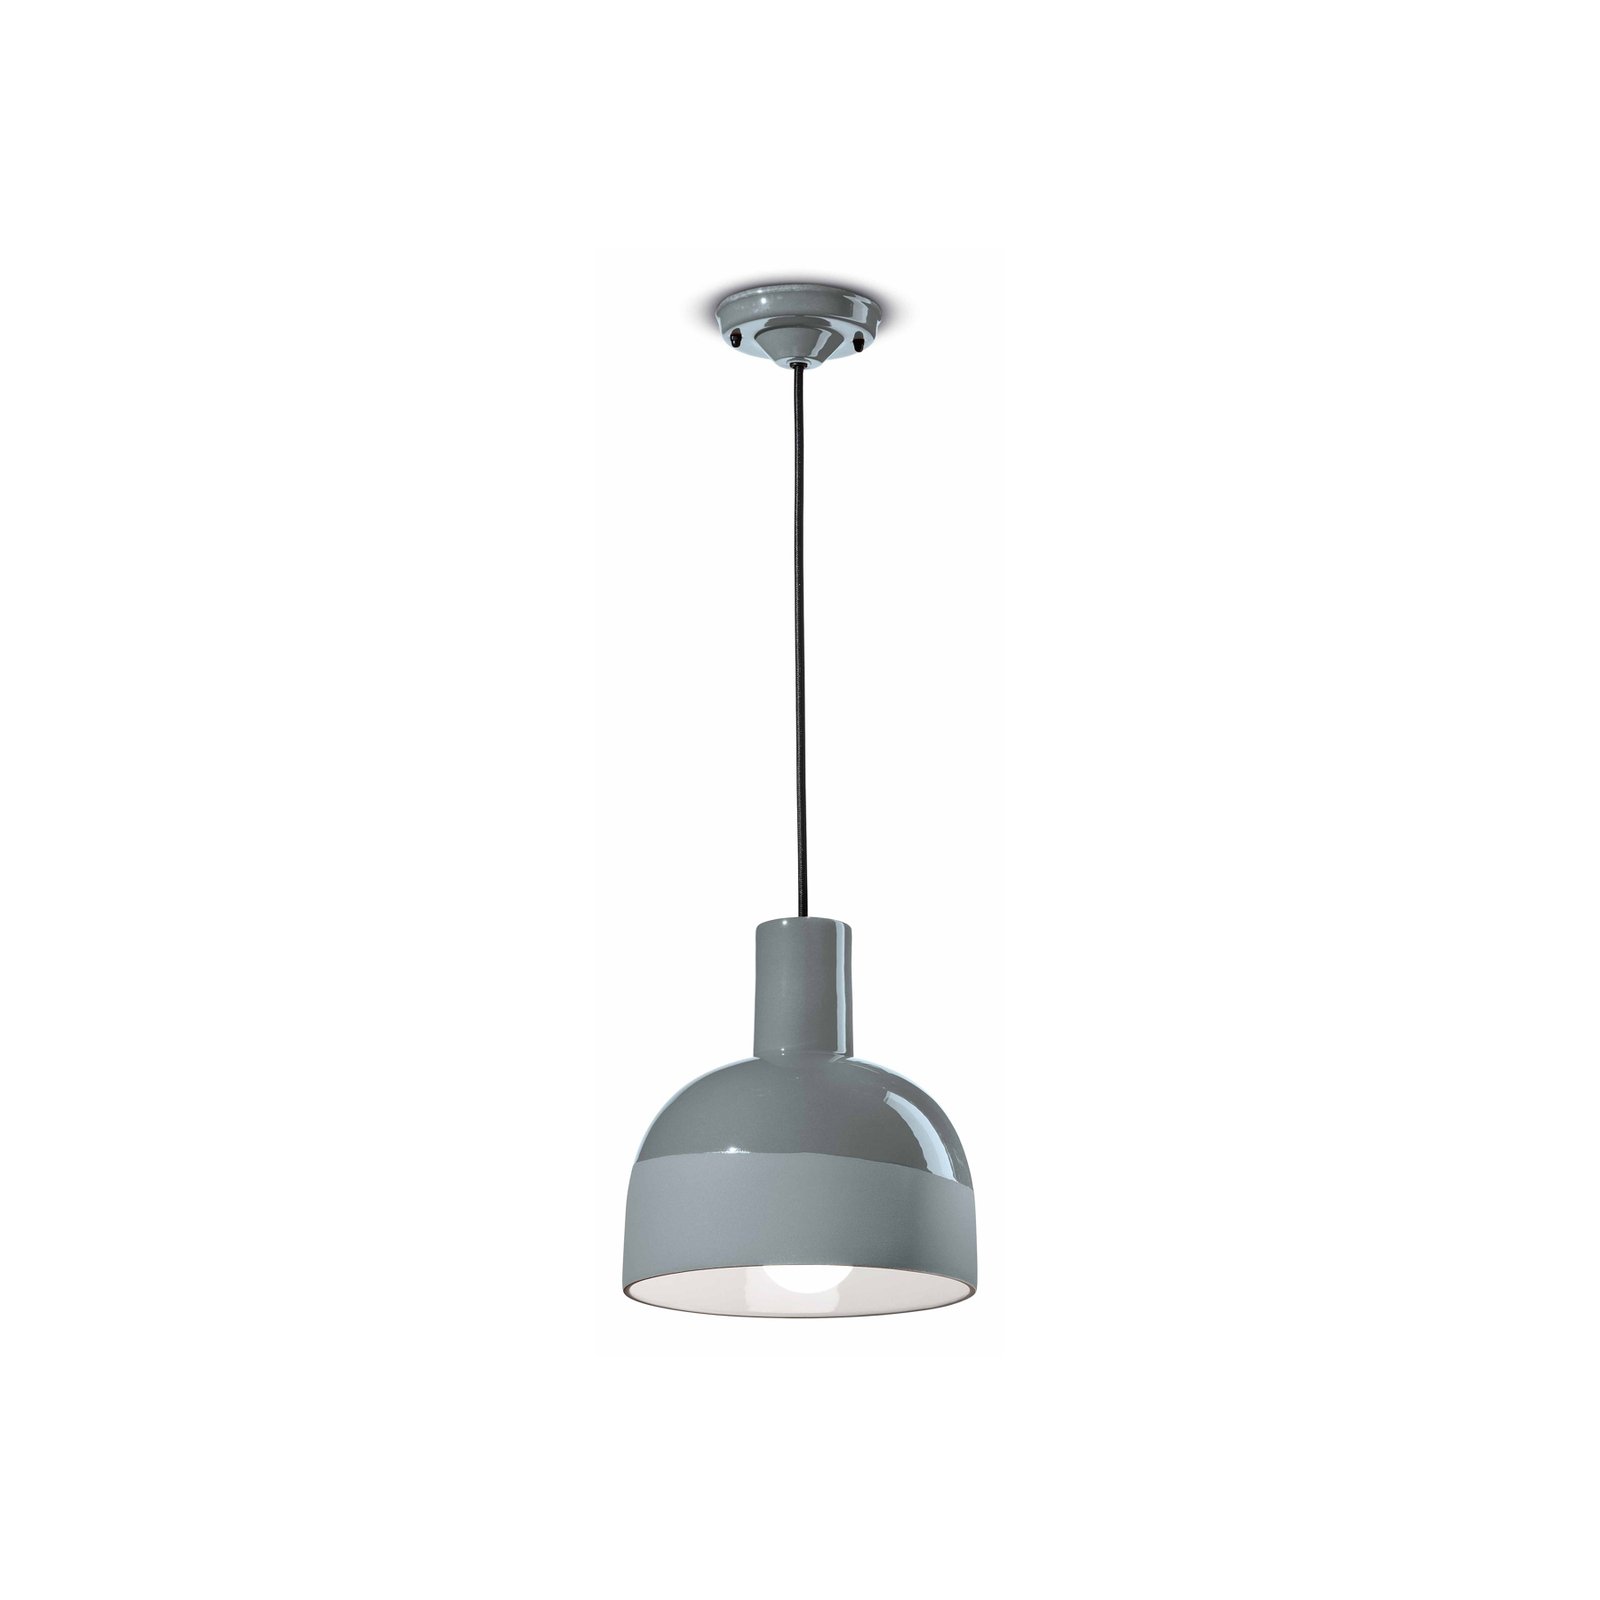 Caxixi pendant light made of ceramic, grey